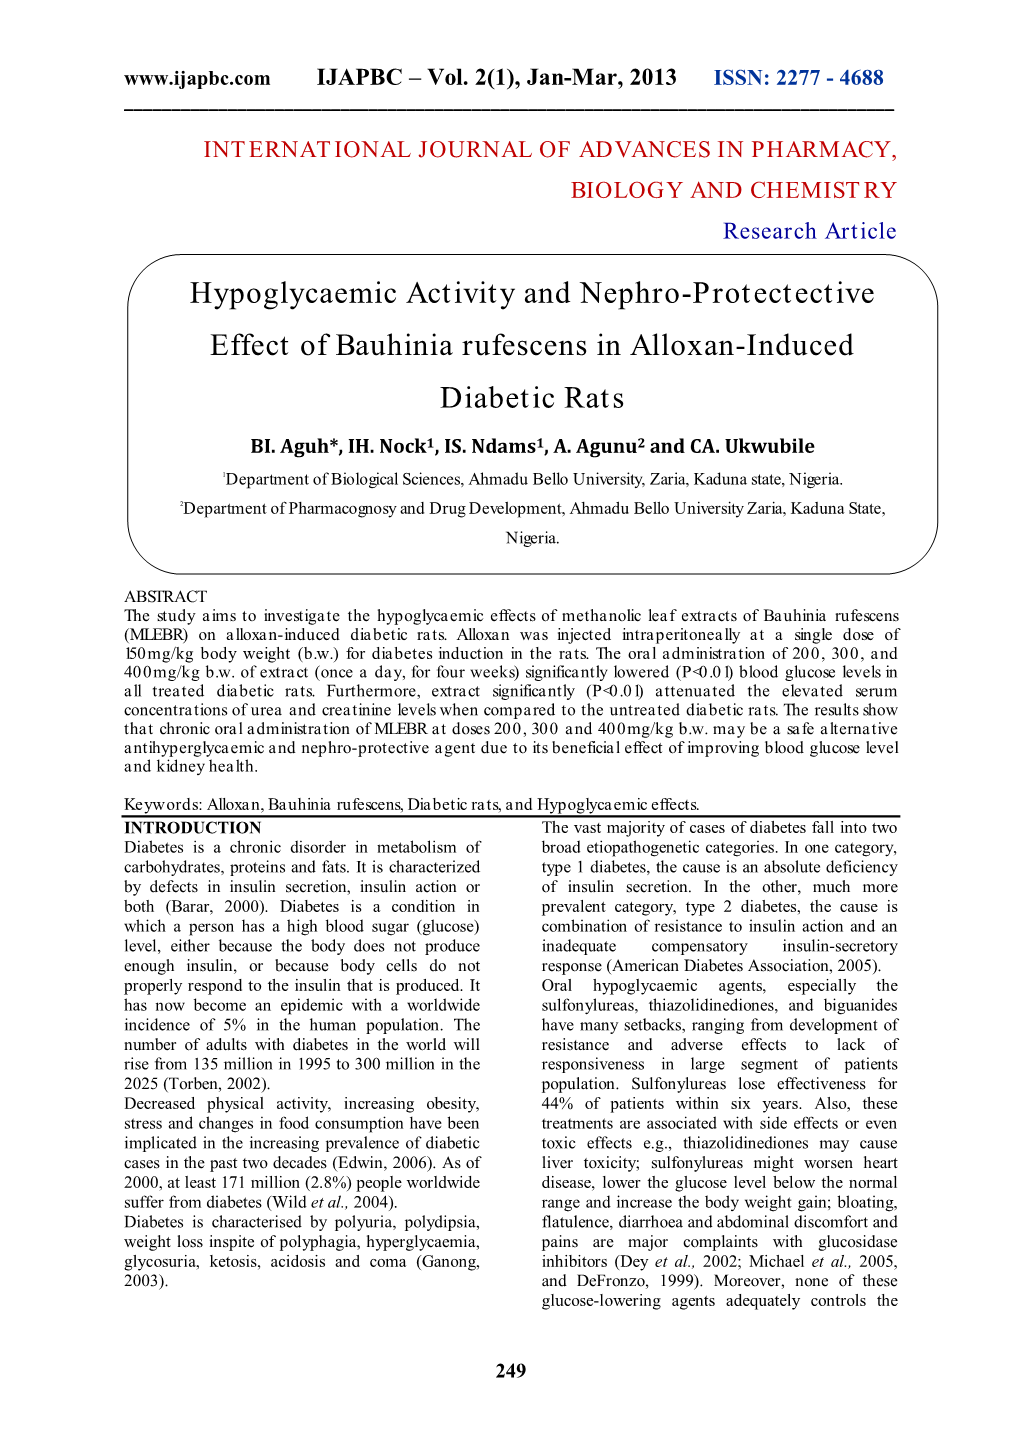 Hypoglycaemic Activity and Nephro-Protectective Effect Of